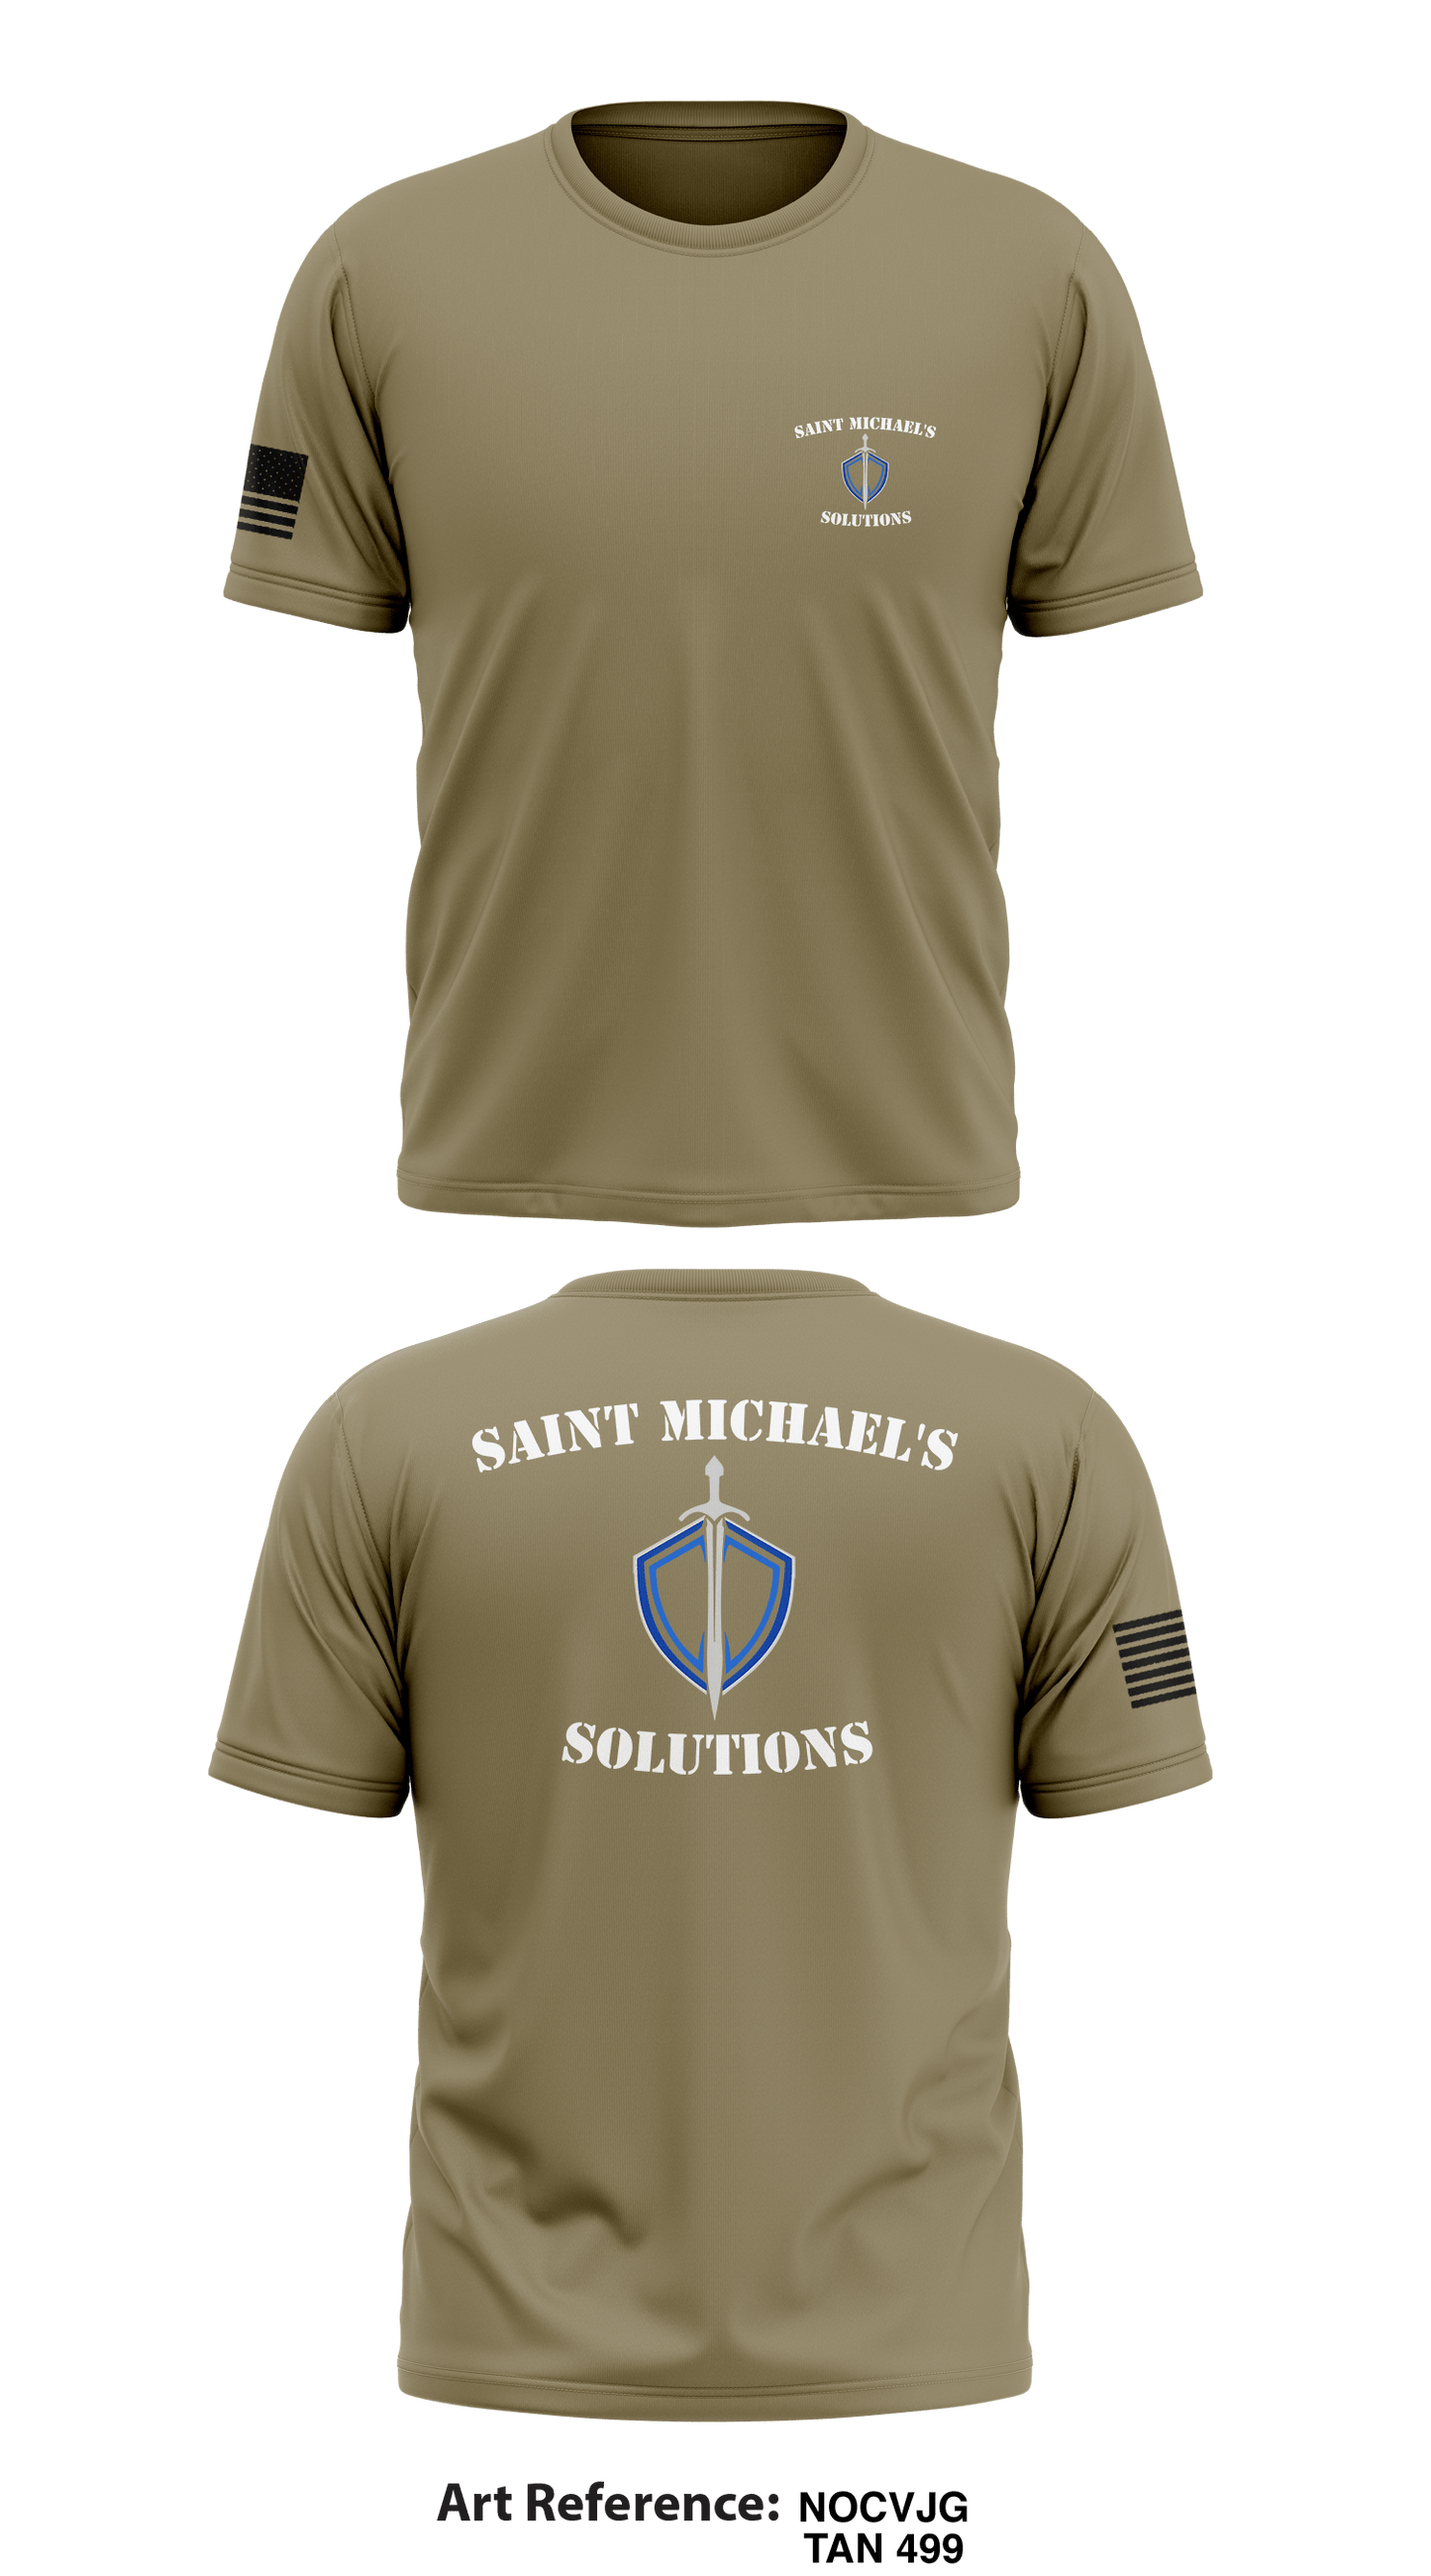 Saint Michael's Solutions Store 1 Core Men's SS Performance Tee - NocVjG